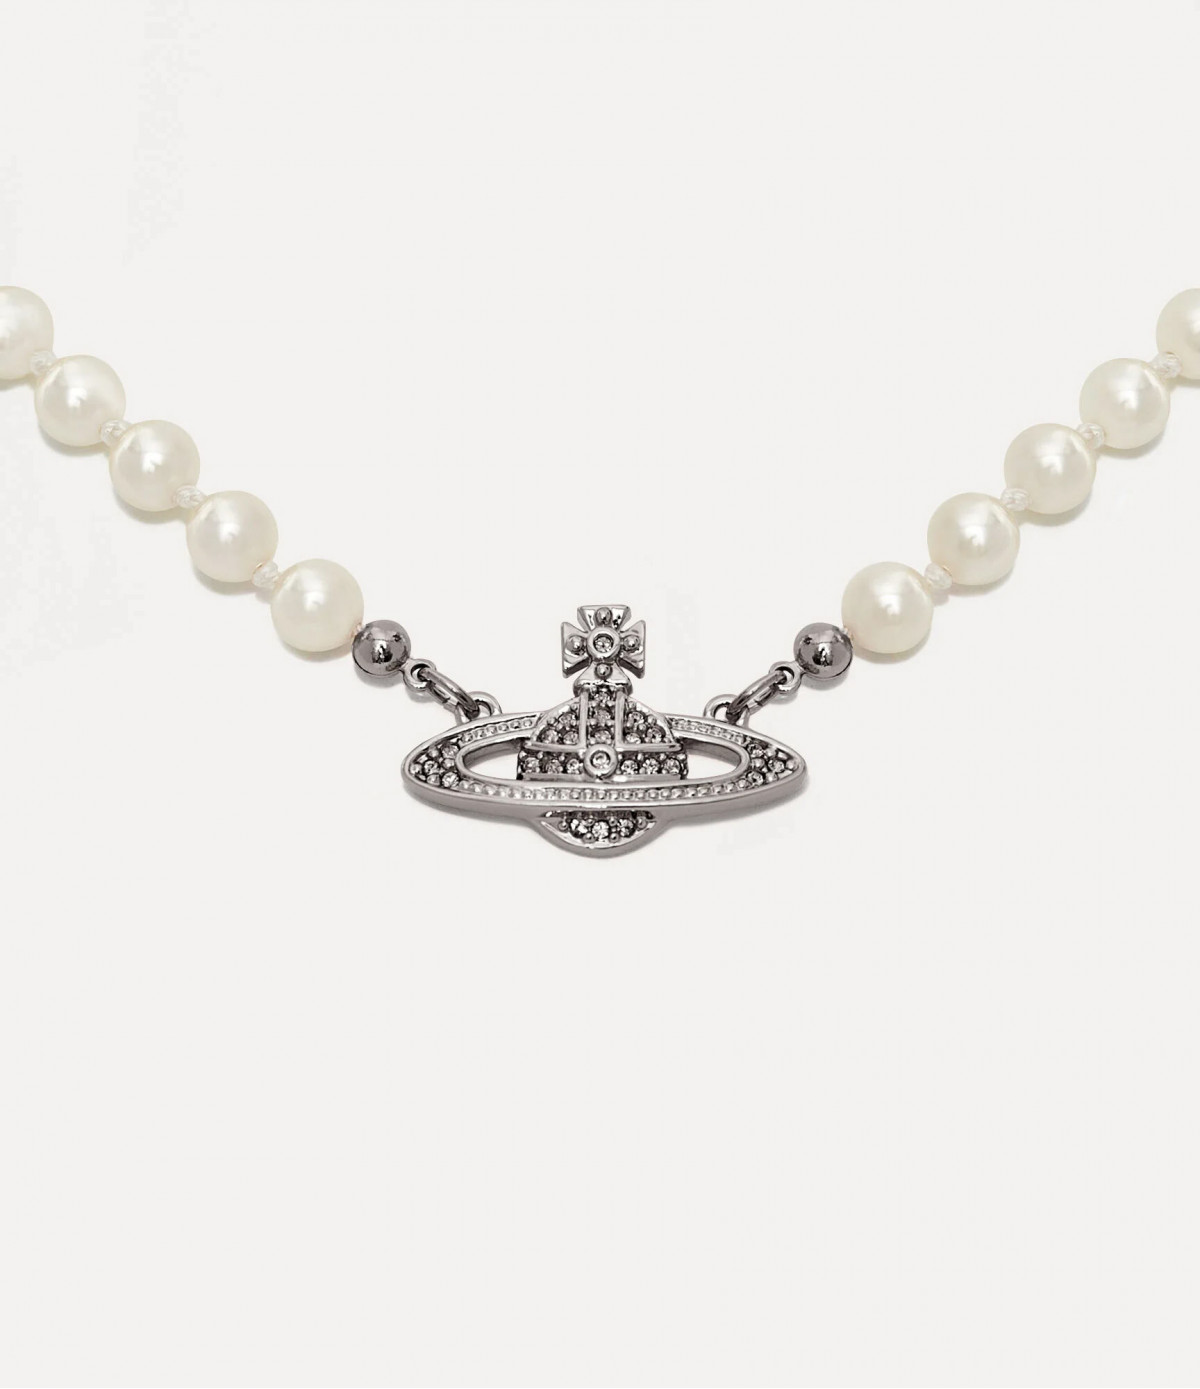 Колье Vivienne Westwood Mini Bas Relief Pearl choker (Silver)